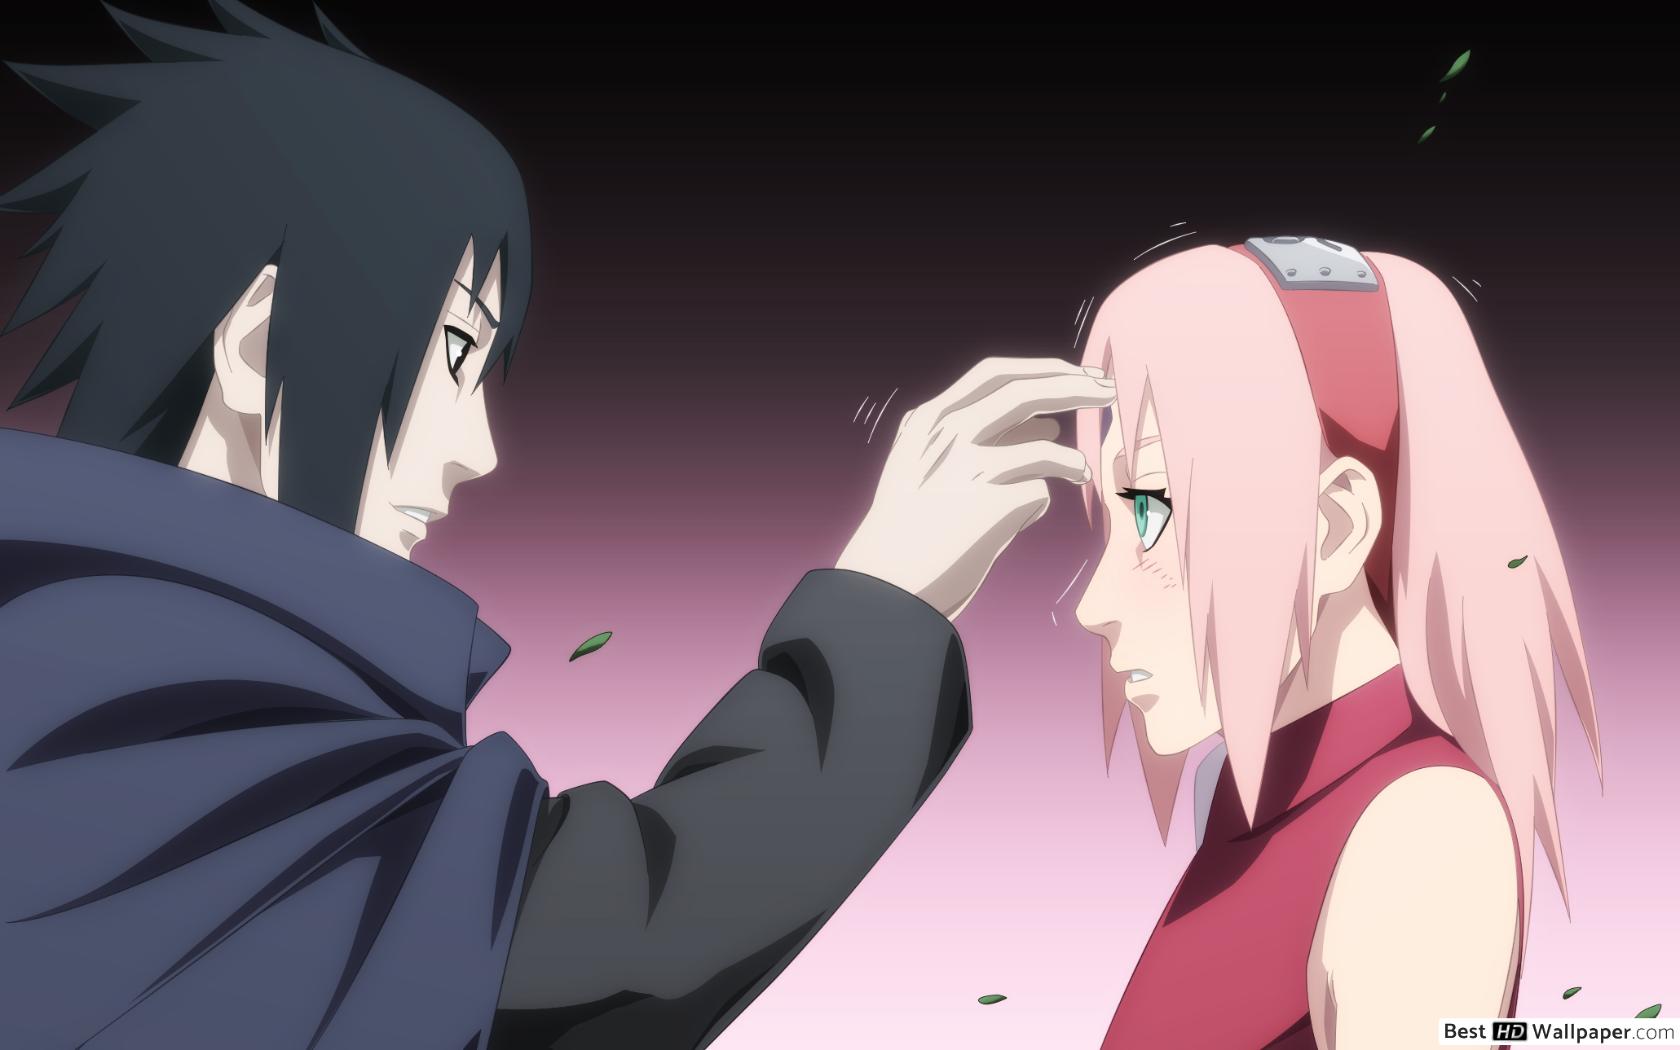 MK Animes - nova novel de Naruto tem beijo entre Sasuke e Sakura amooooo